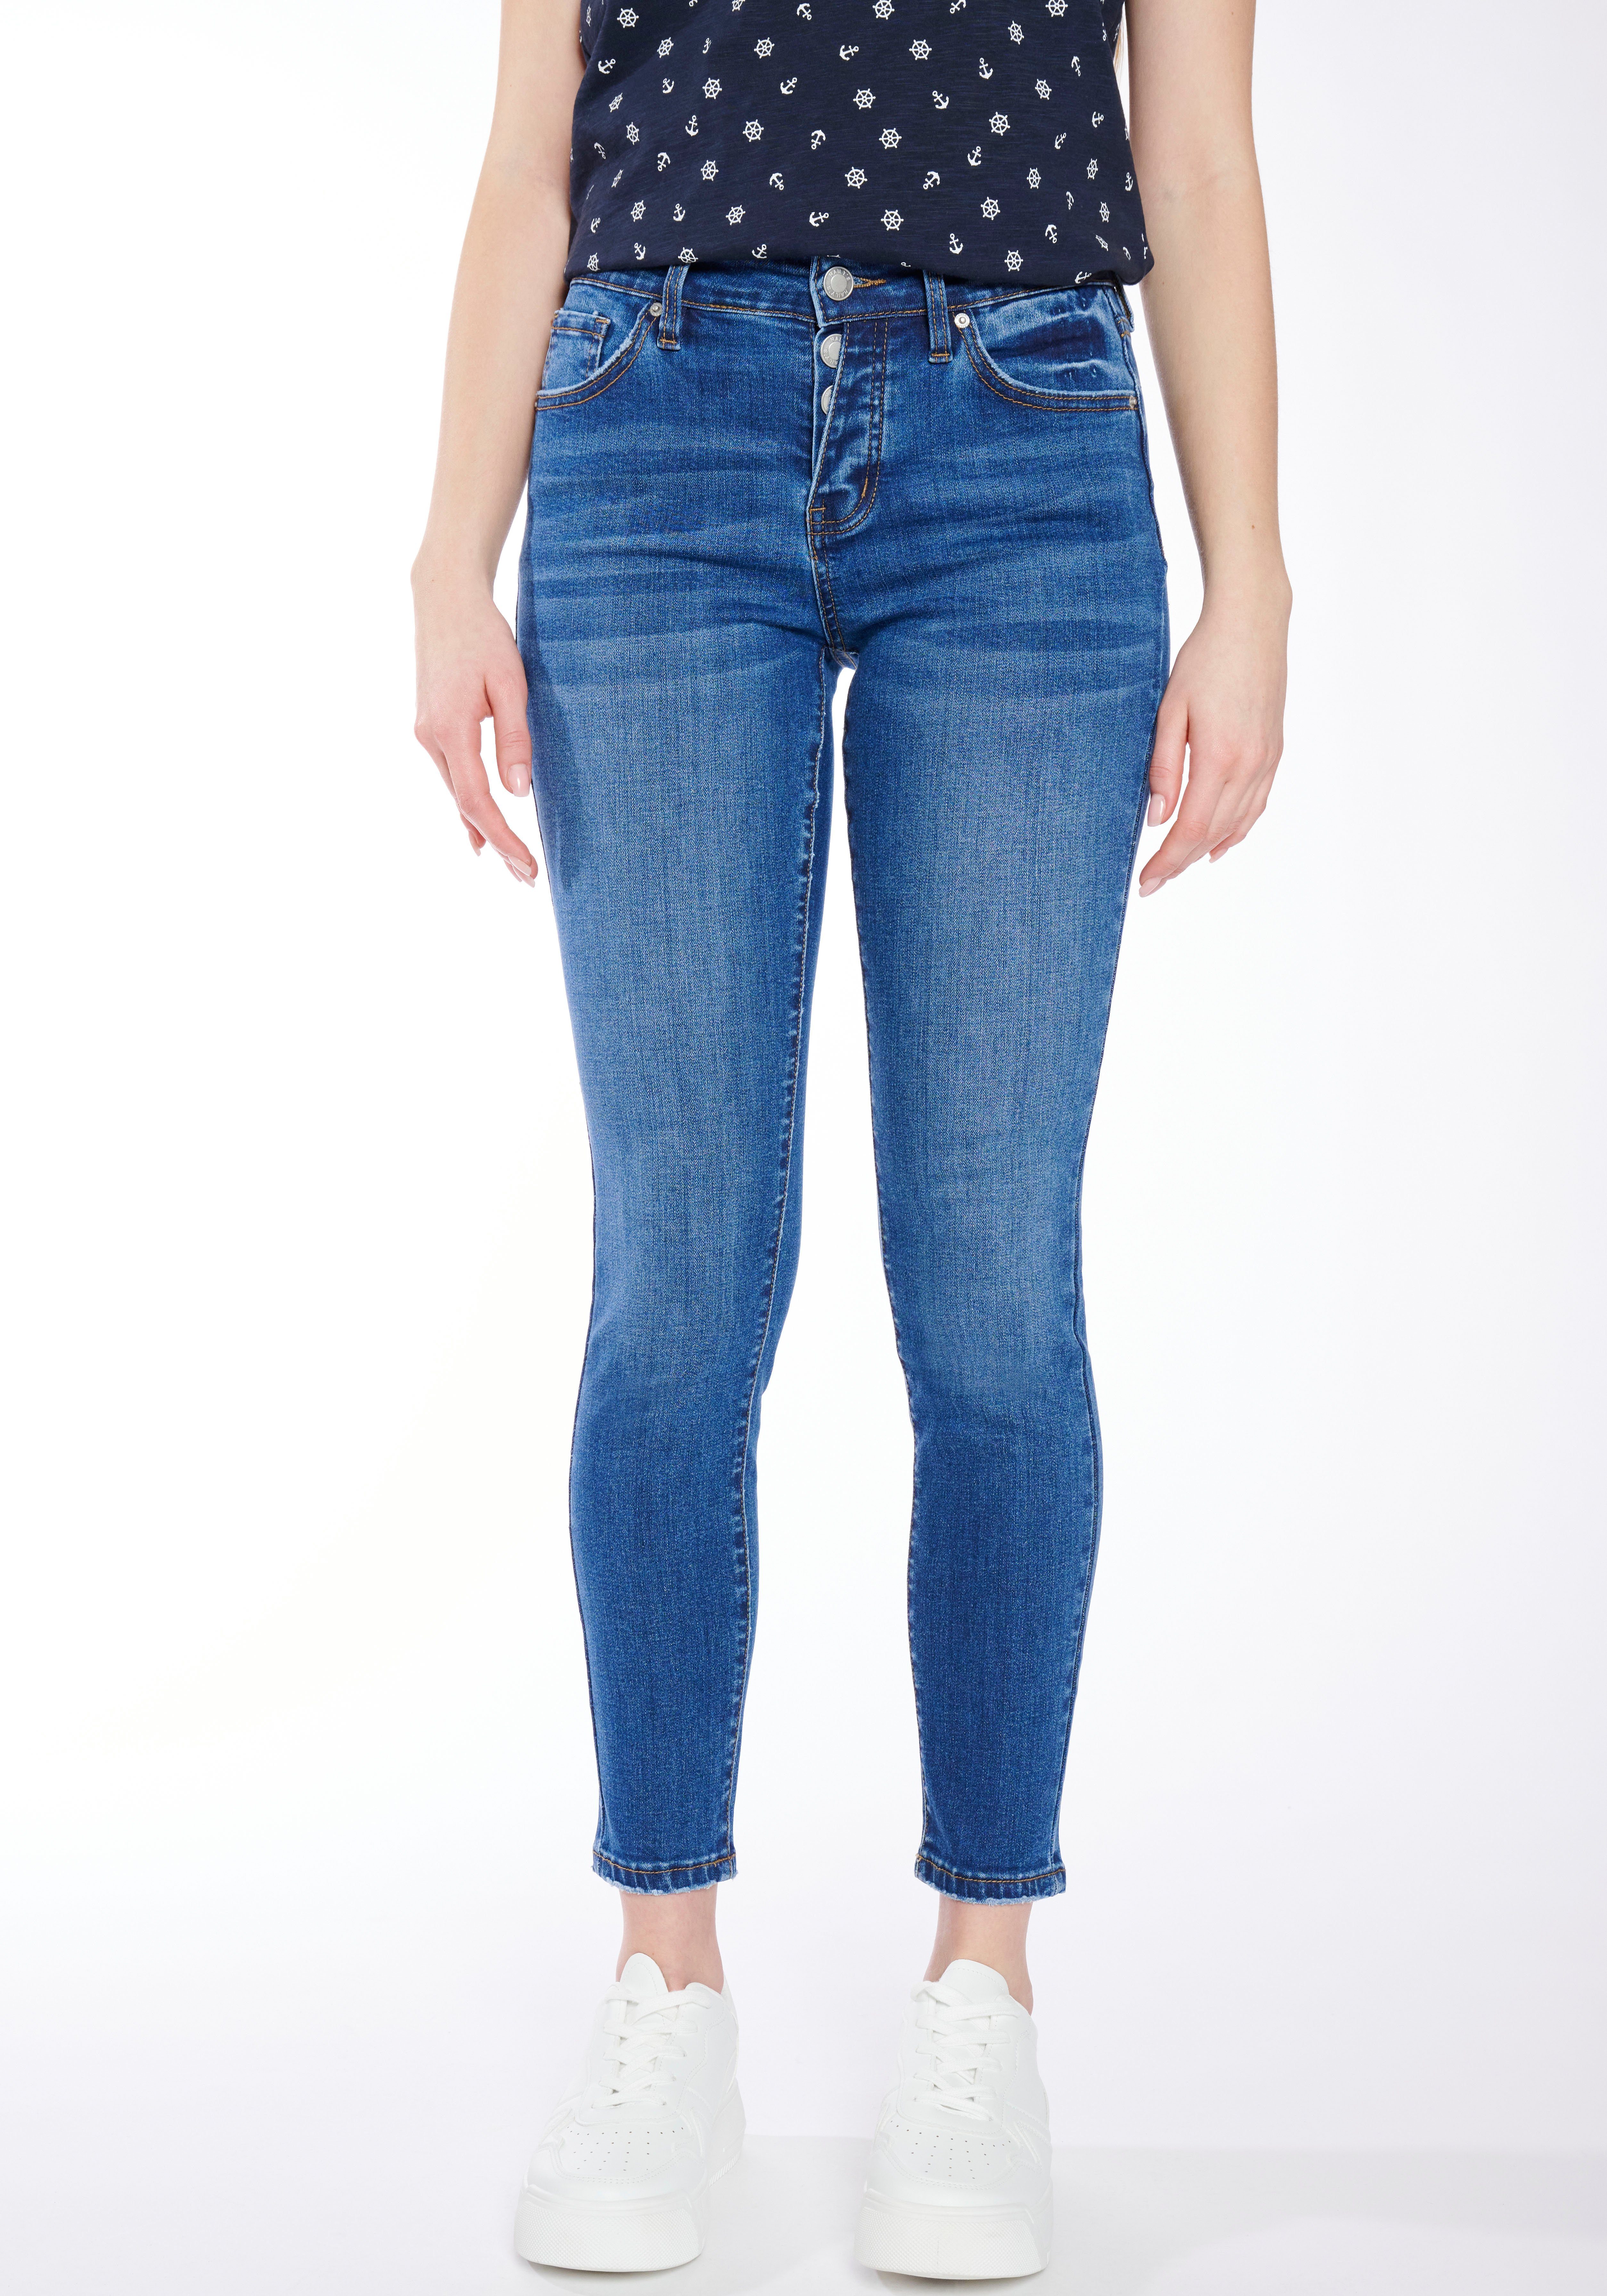 HaILYS 5-pocket jeans